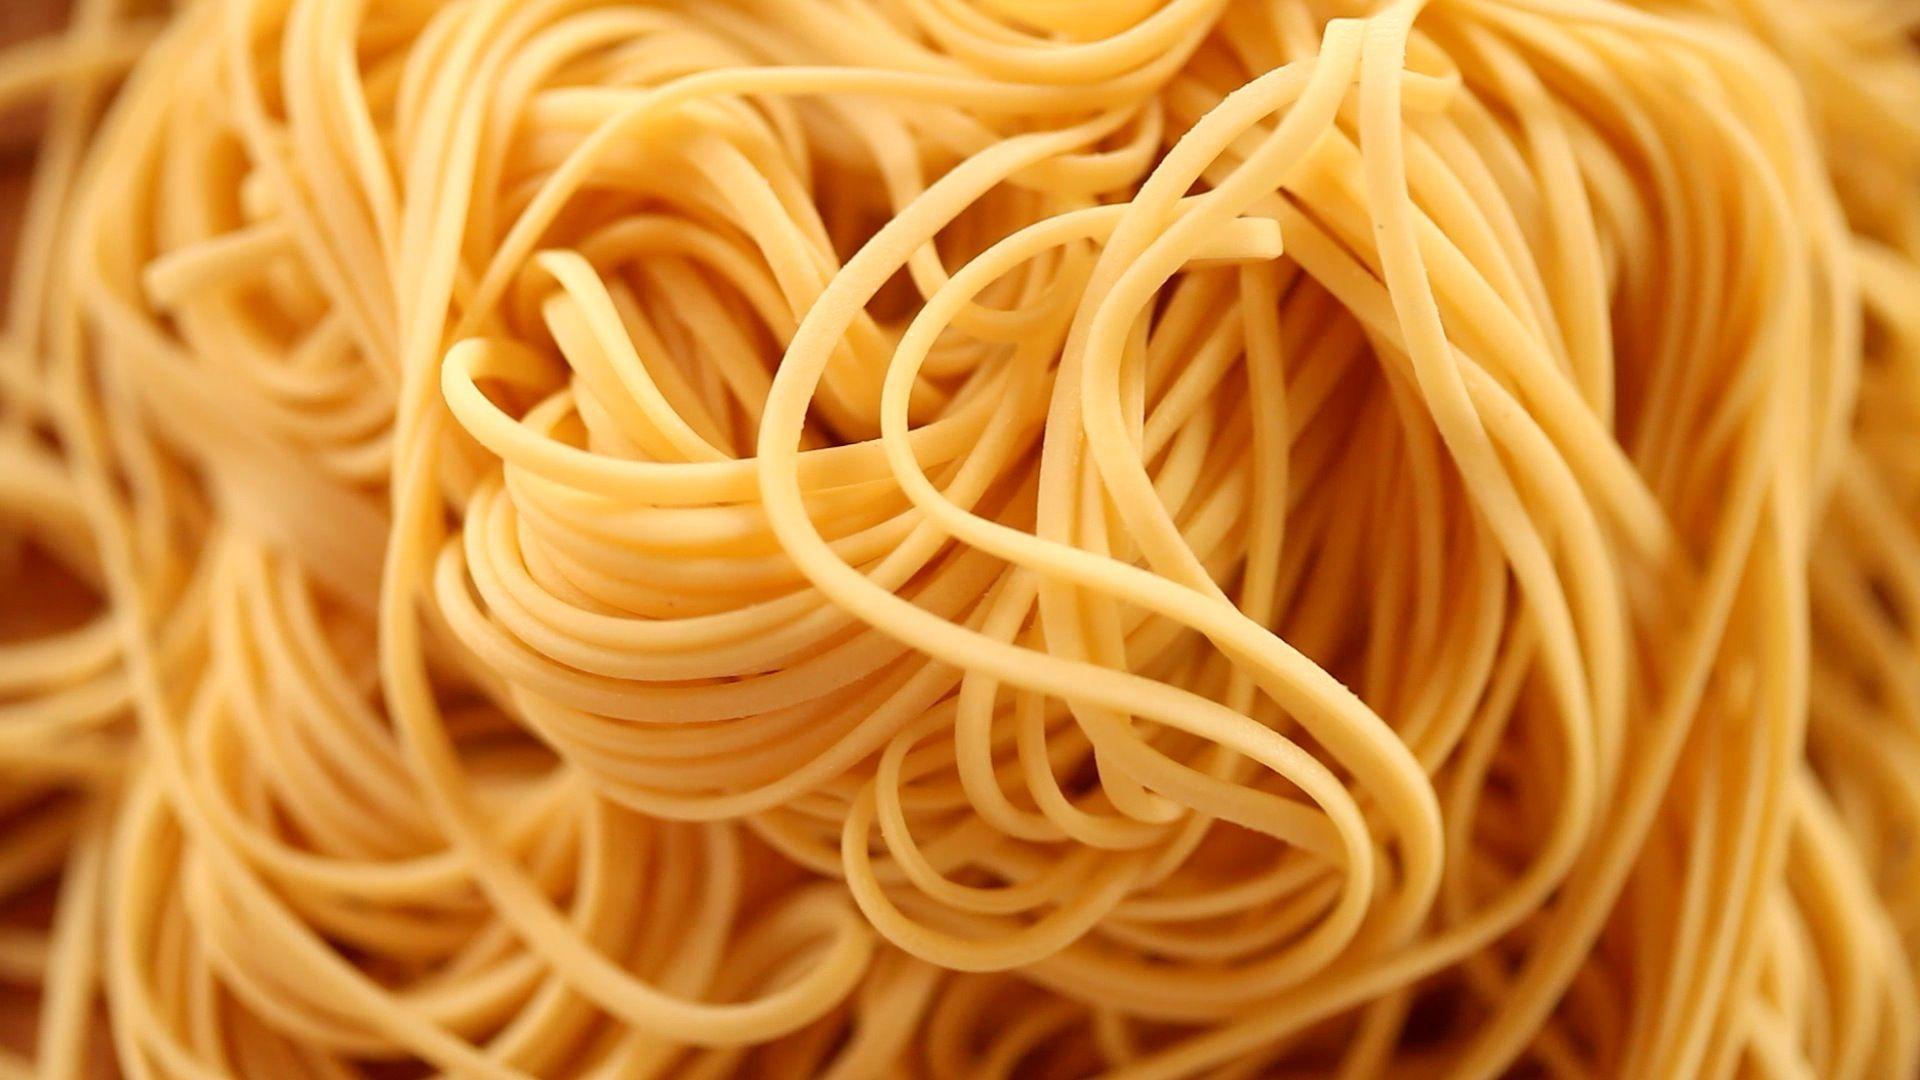 Свежая лапша. Спагетти. Макароны длинные. Паста спагетти. Макаронные изделия лапша.